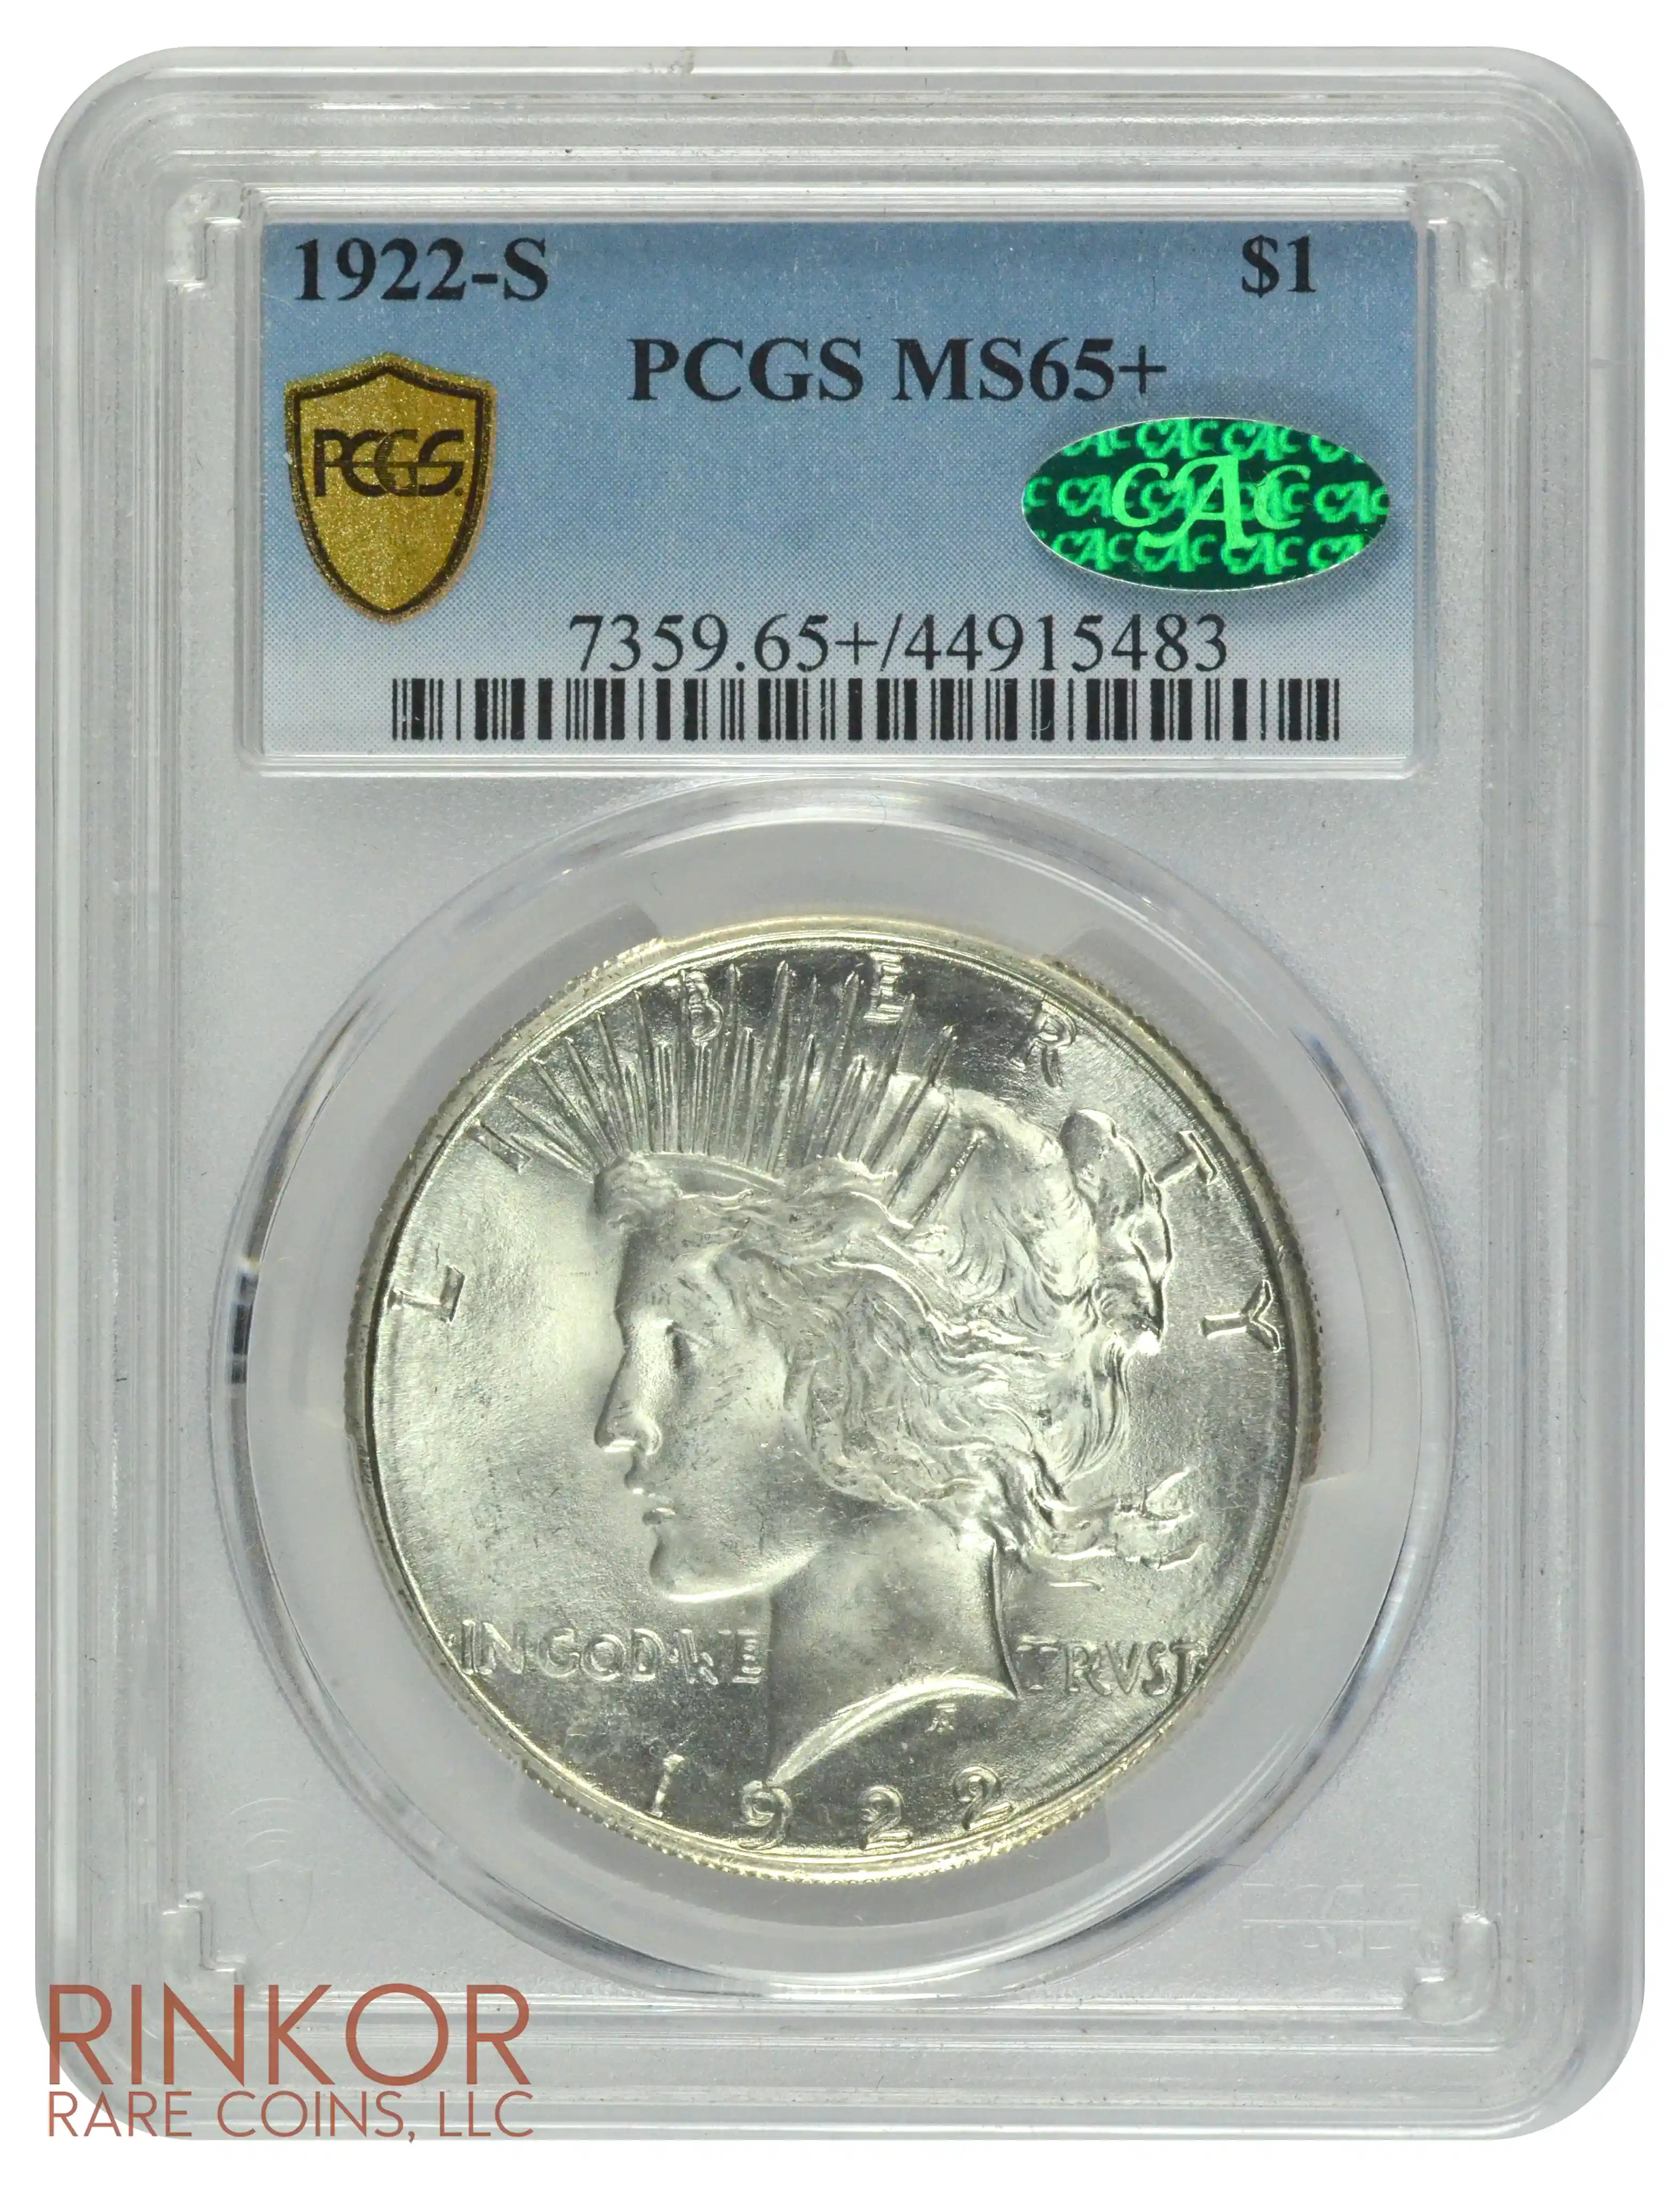 1922-S $1 PCGS MS 65+ CAC